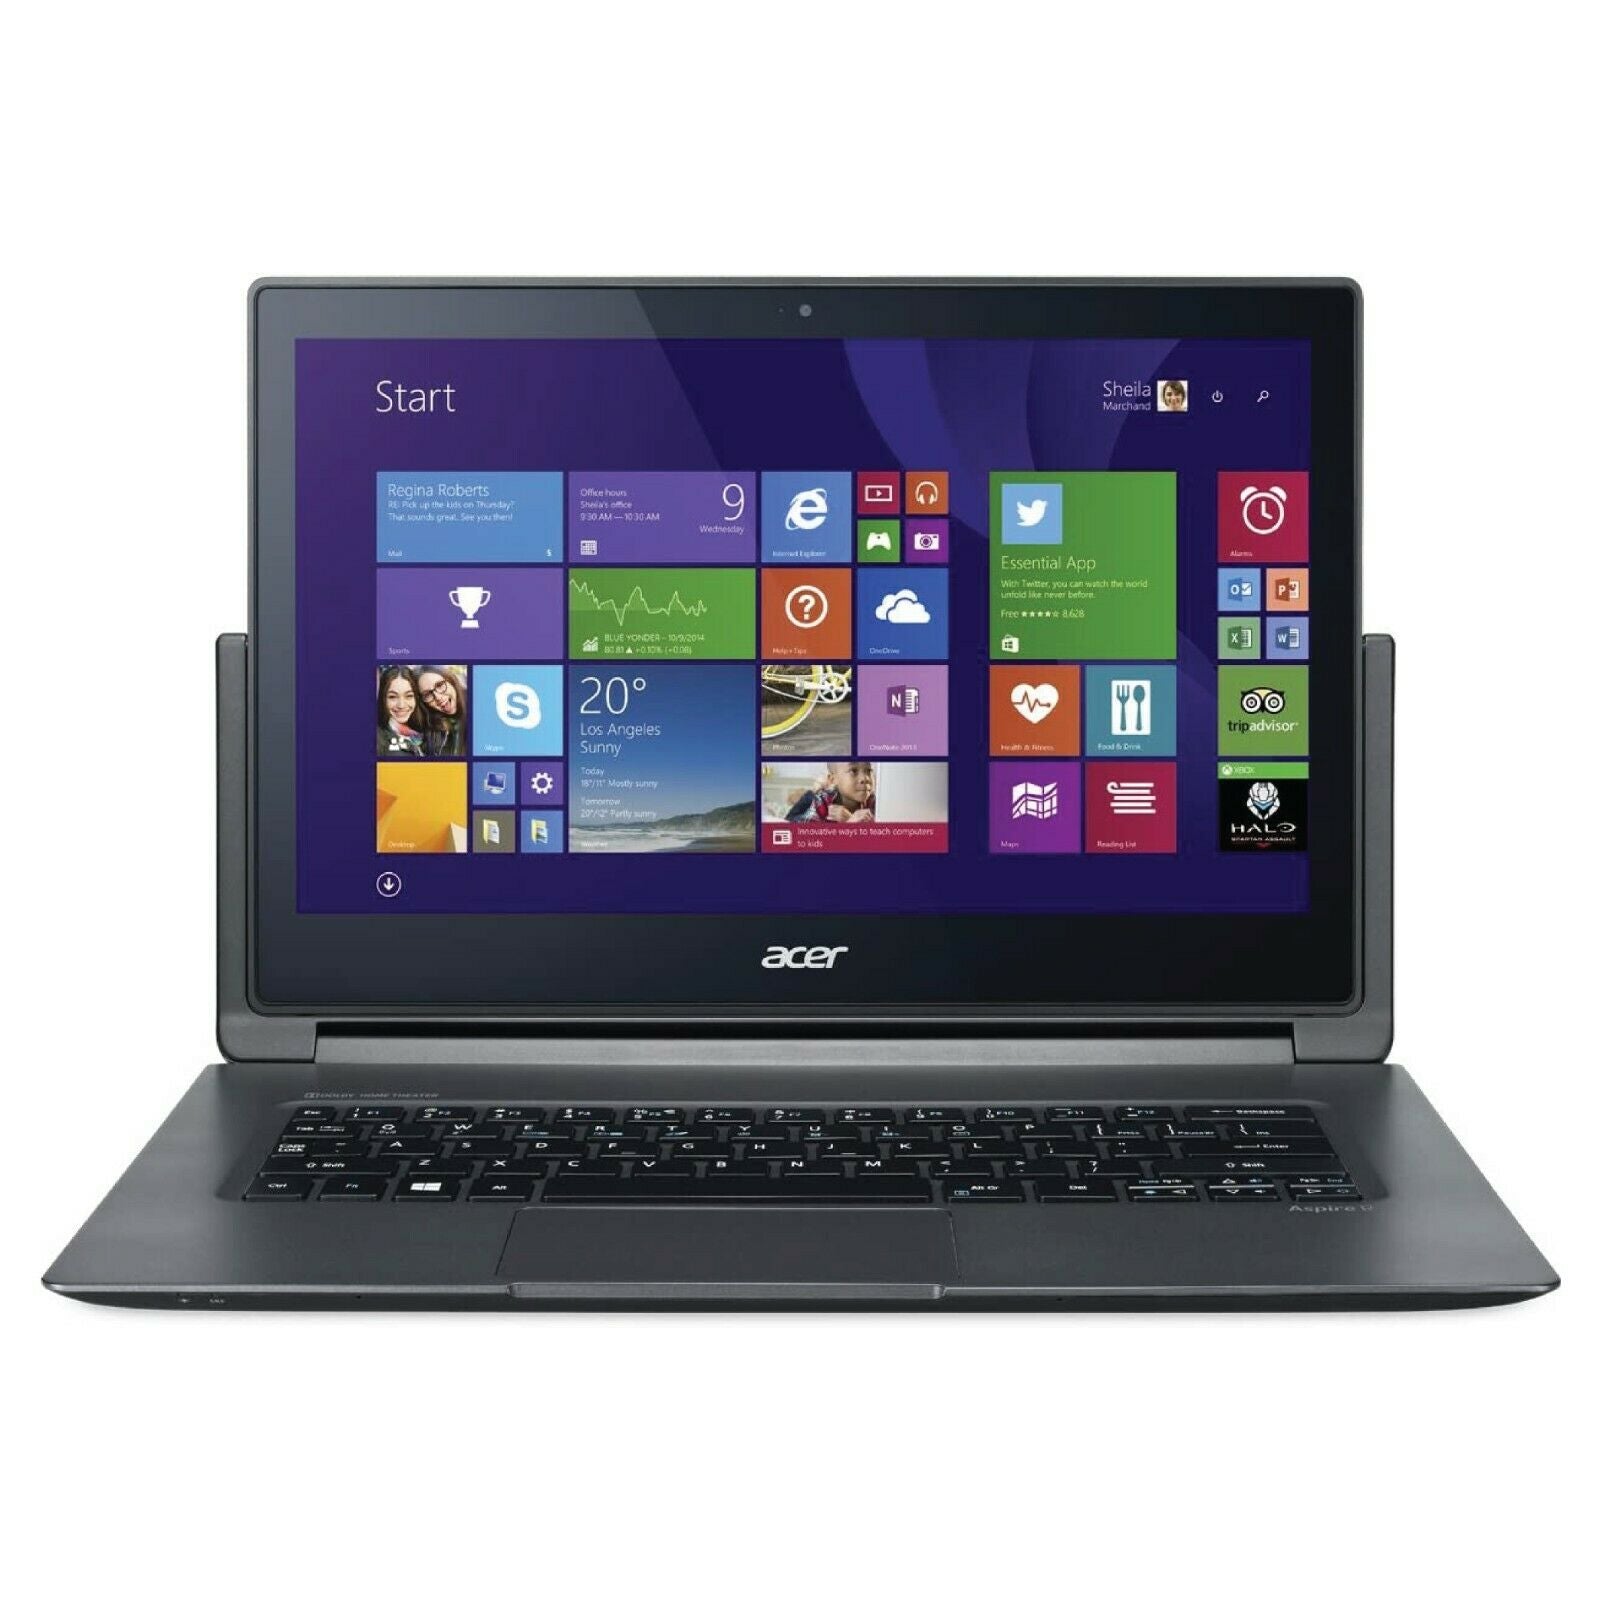 Acer Aspire Laptop Intel Core i5-5200U CPU @ 2.20GHz 8GB RAM 128GB SSD AspireR7371T-09-B